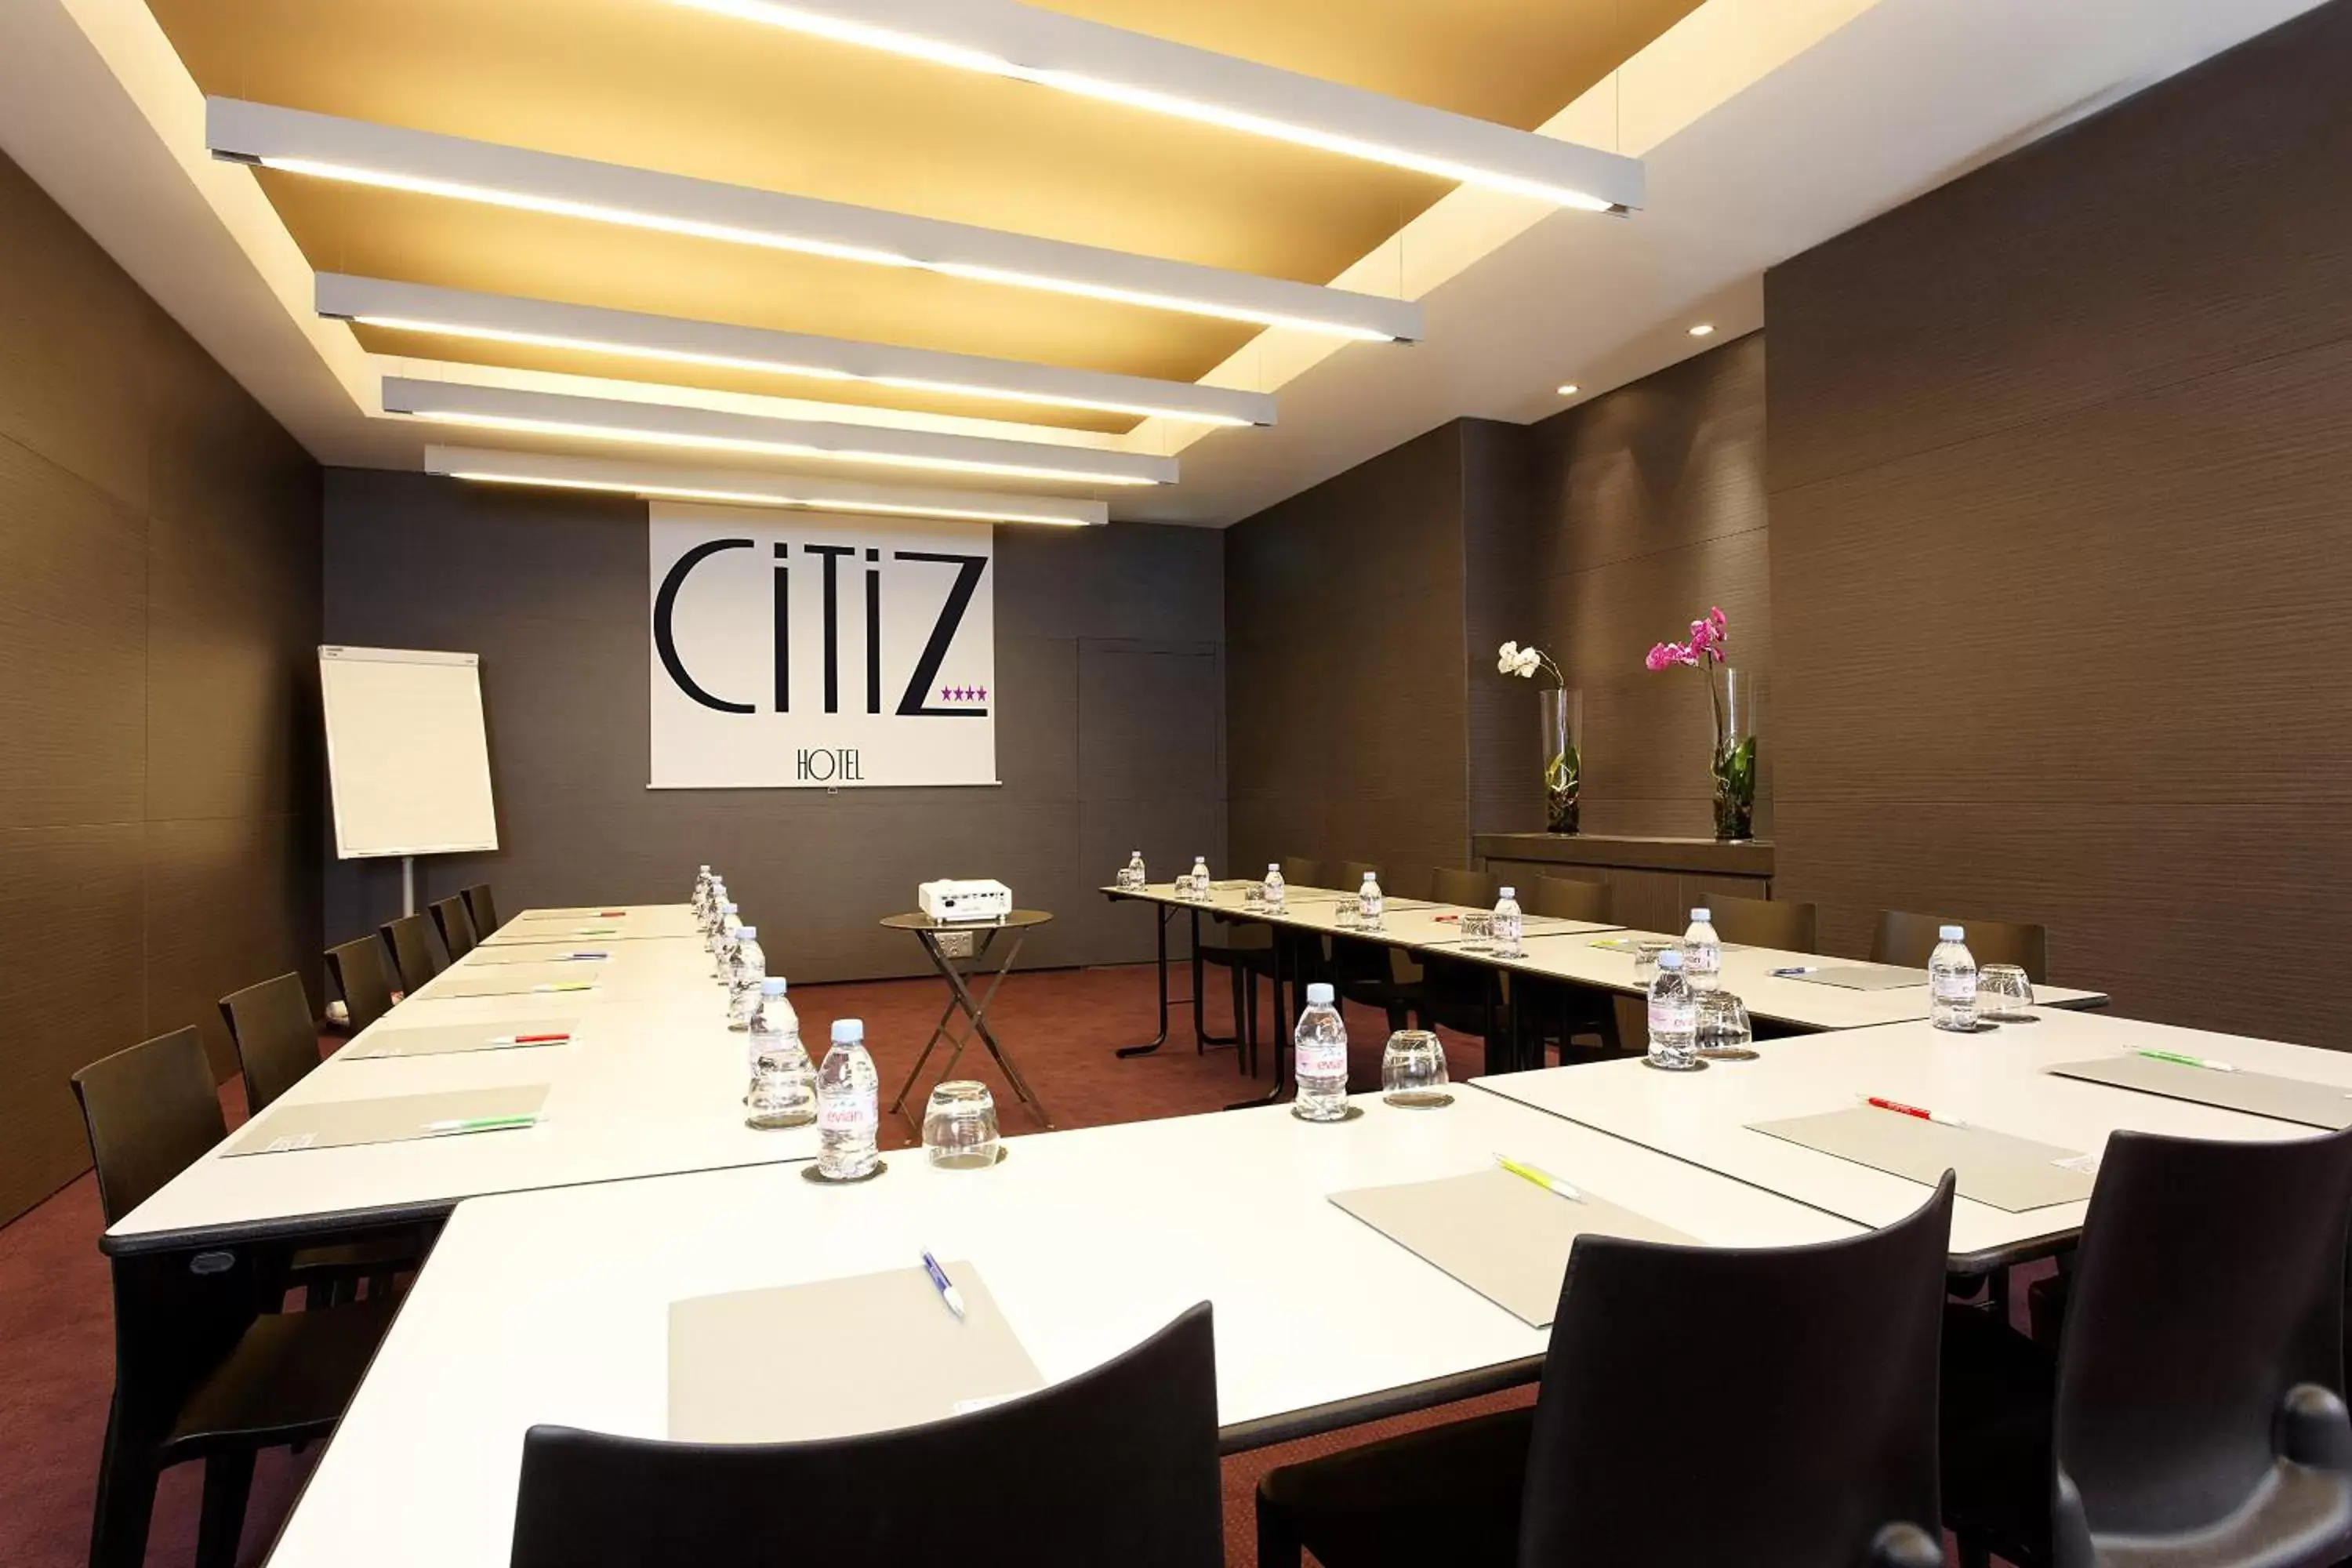 Business facilities in Citiz Hotel